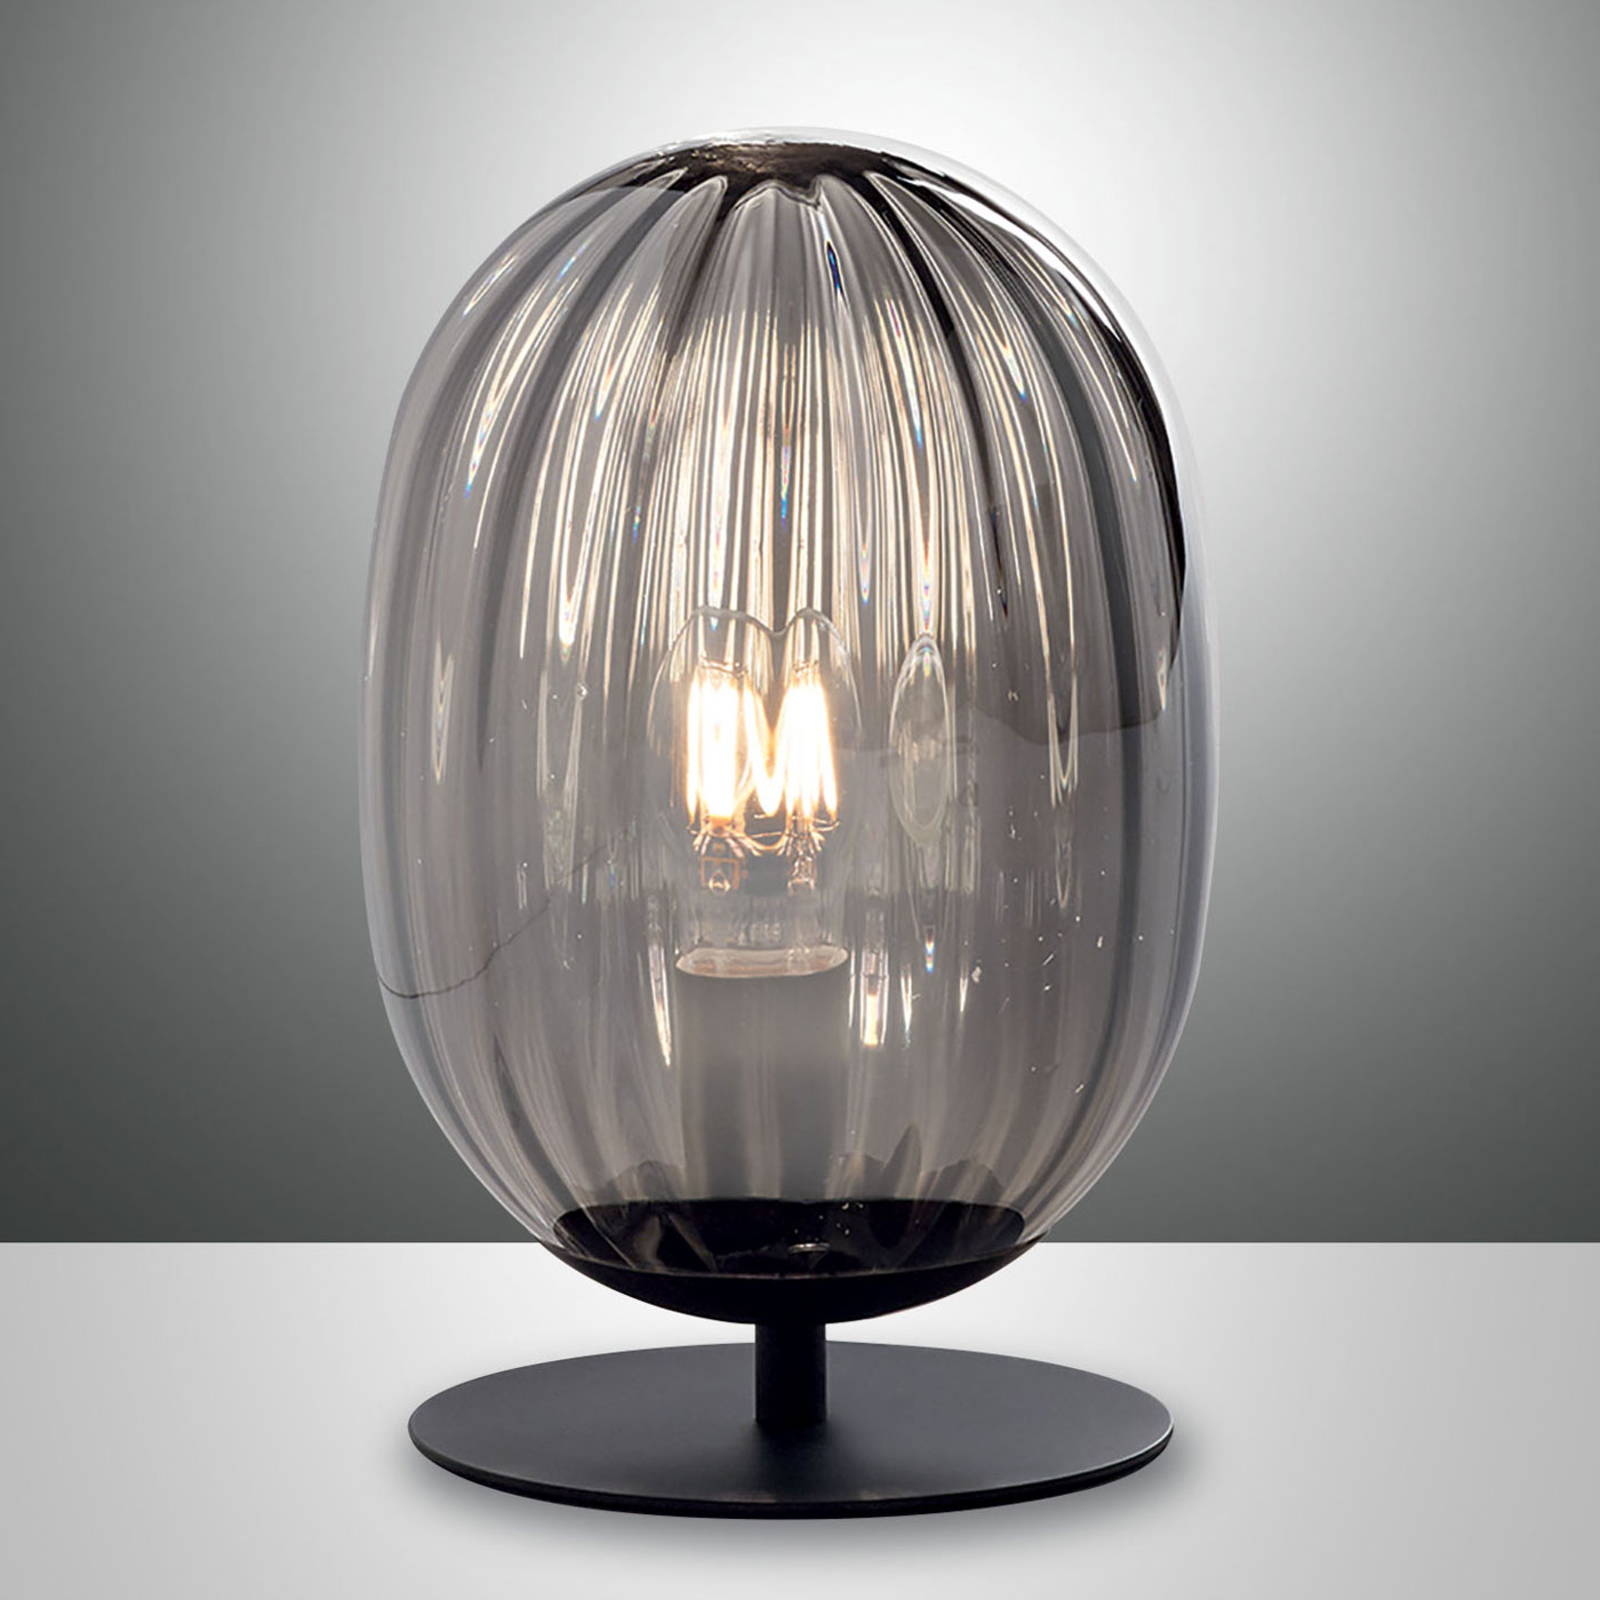 Ondergedompeld Carrière helpen Tafellamp Infinity met gedraaide glazen kap | Lampen24.nl